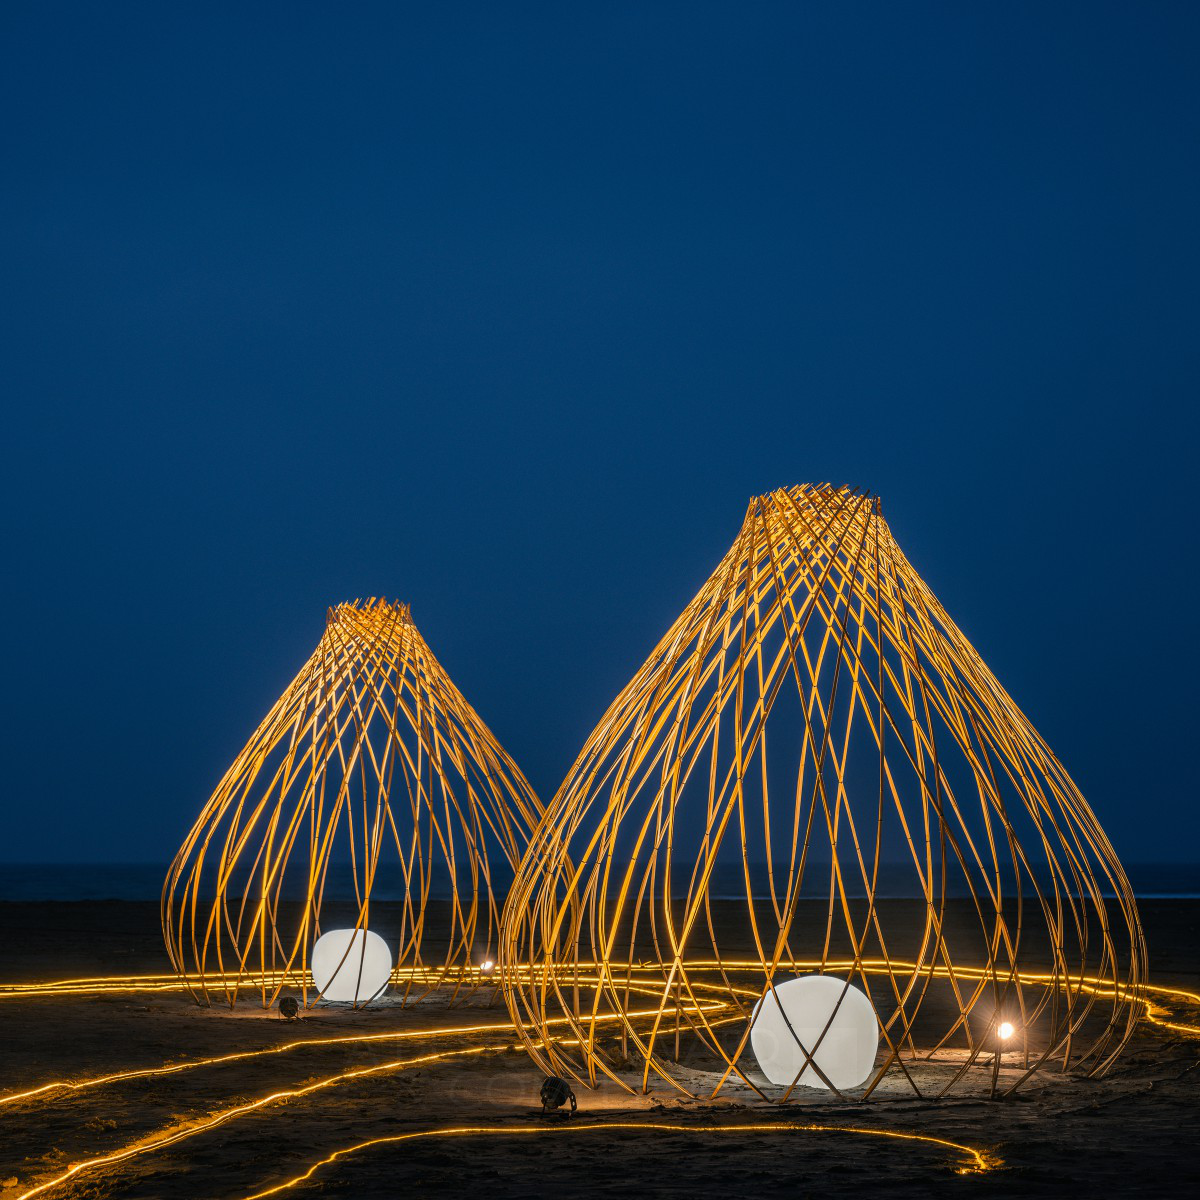 Dance With The Wind Art Installation by Daisuke Nagatomo and Minnie Jan Golden Lighting Projects and Light Art Design Award Winner 2023 